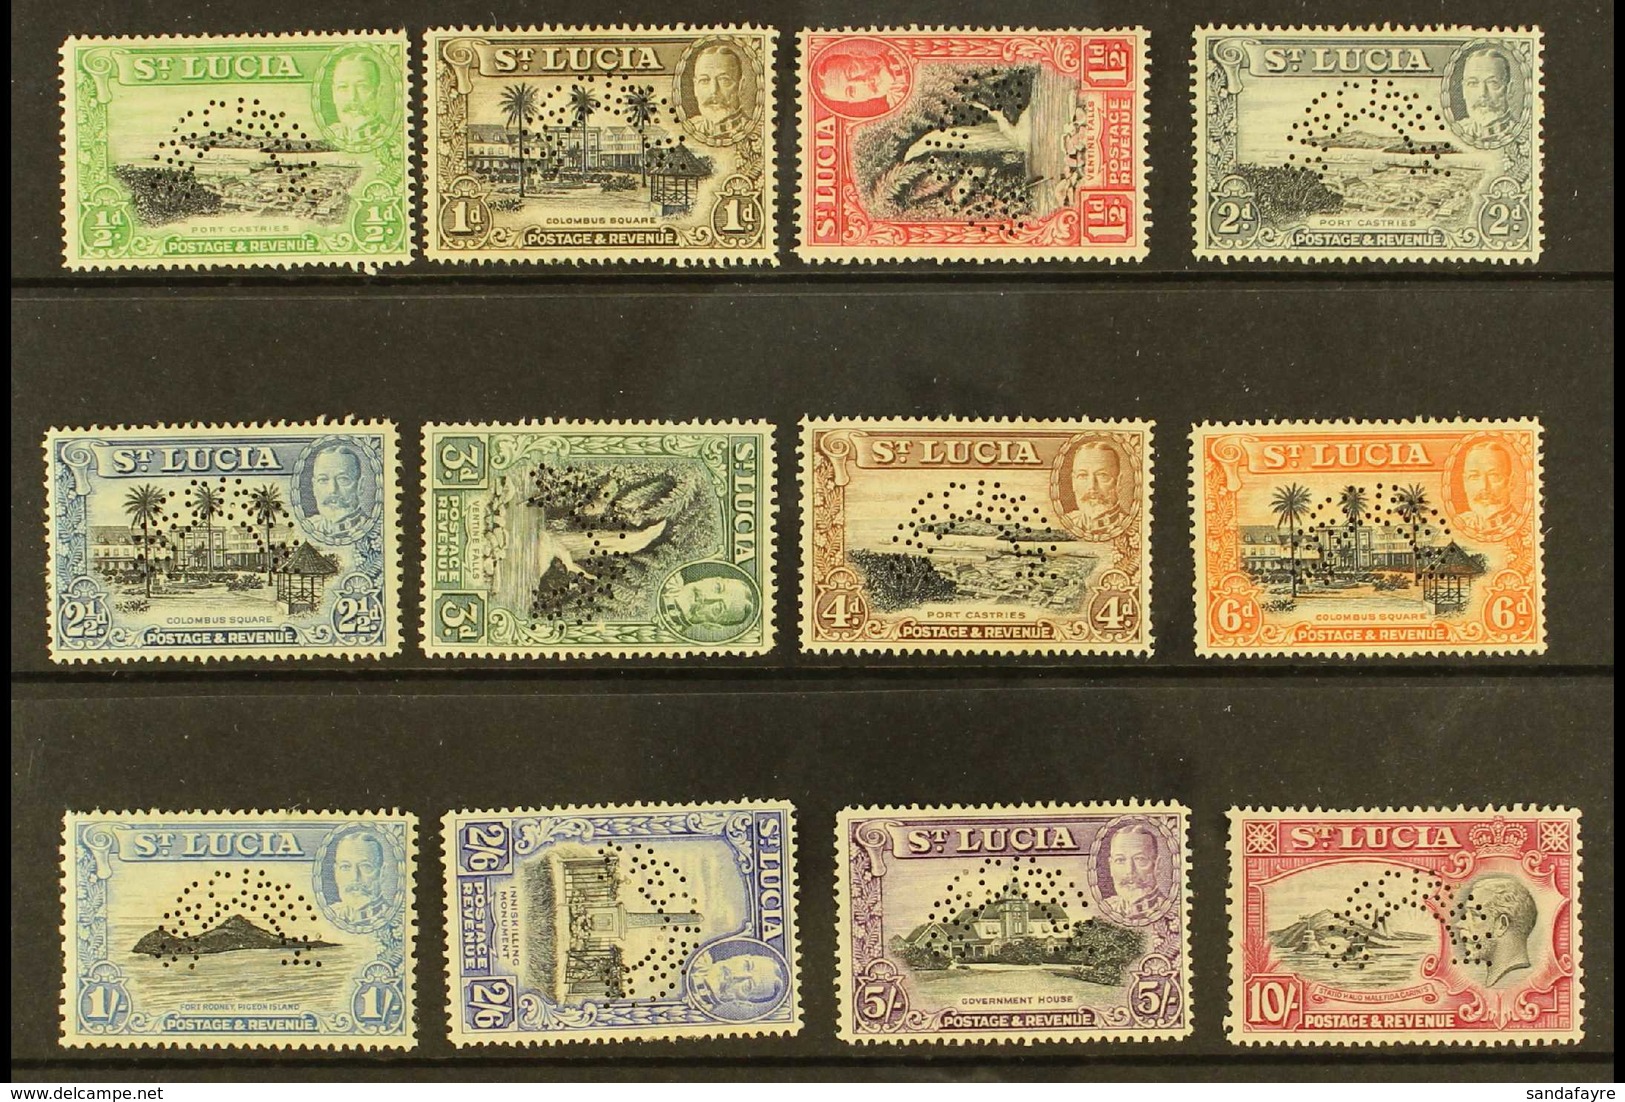 1936 Geo V Pictorial Set, Perforated "Specimen", SG 113s/24s, Fine And Fresh Mint, Large Part Og. (12 Stamps) For More I - Ste Lucie (...-1978)